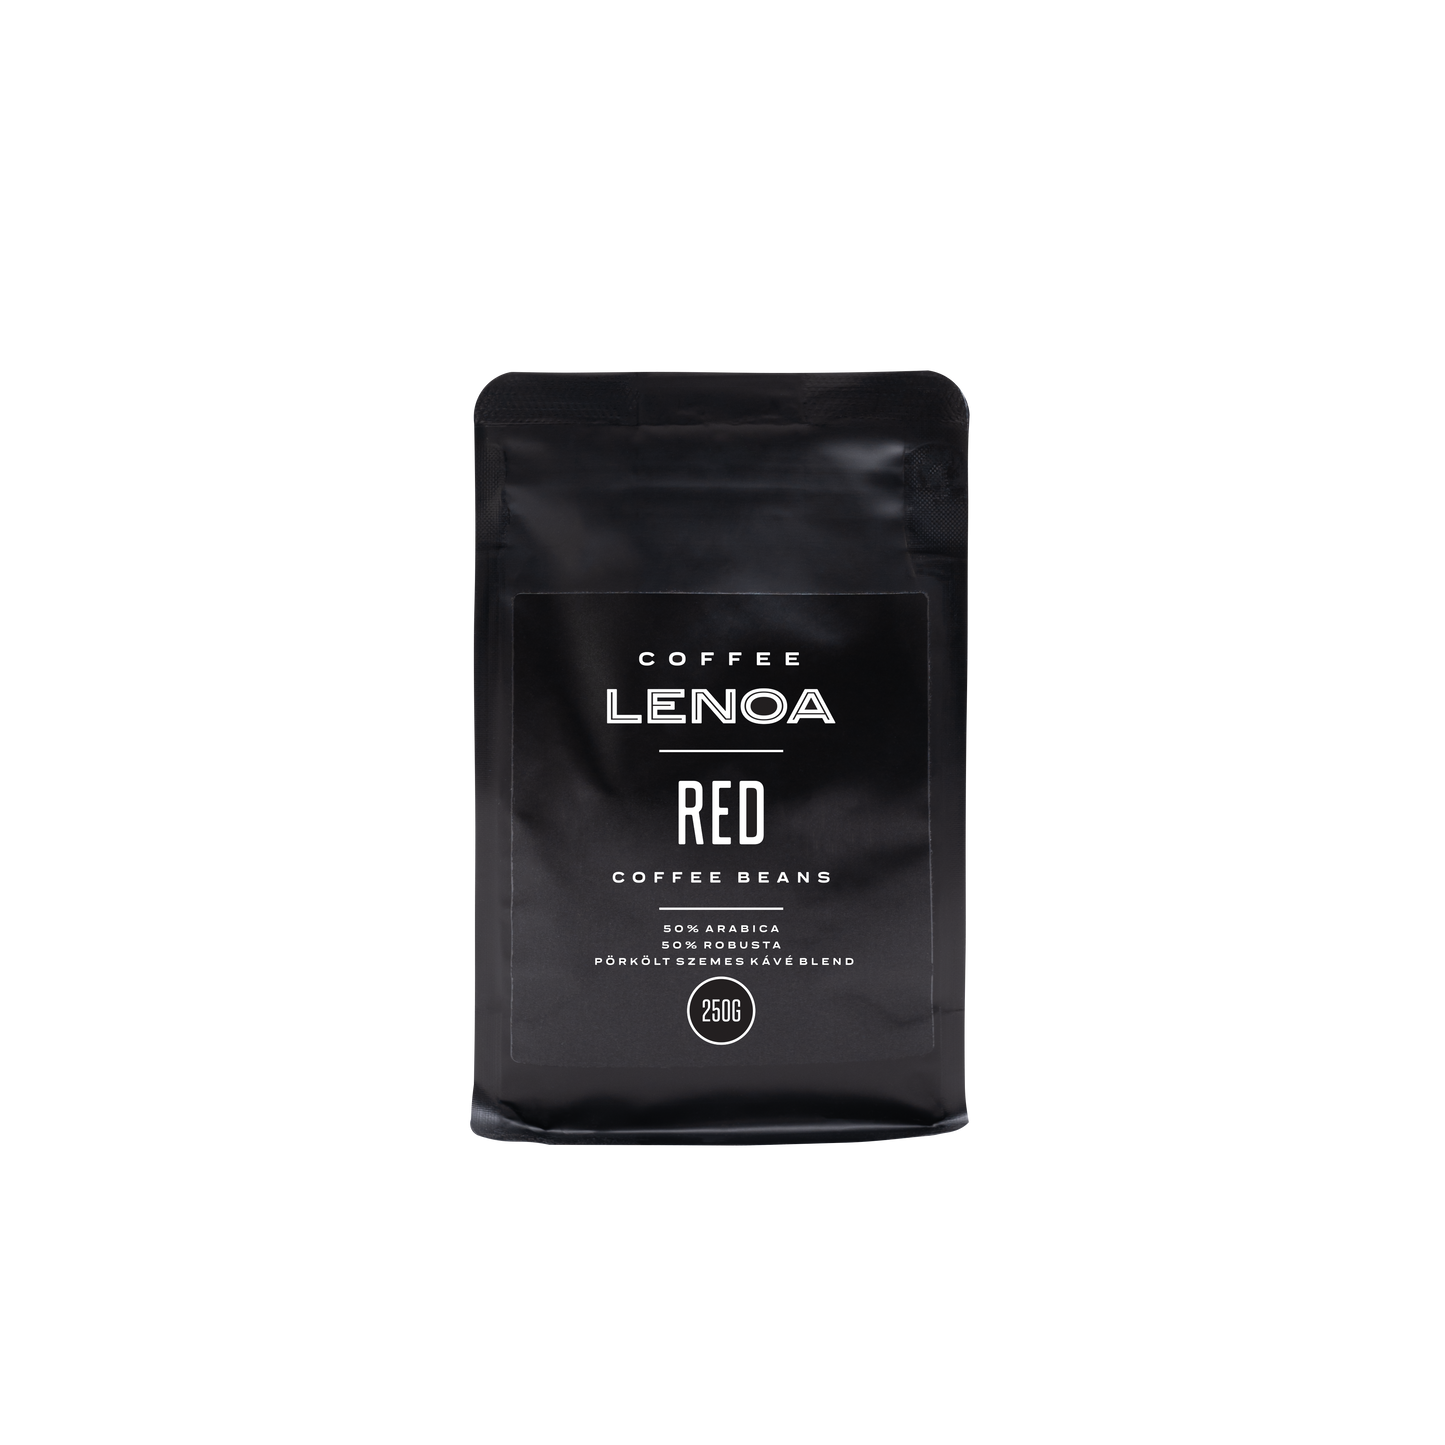 Coffee LENOA - RED coffee beans